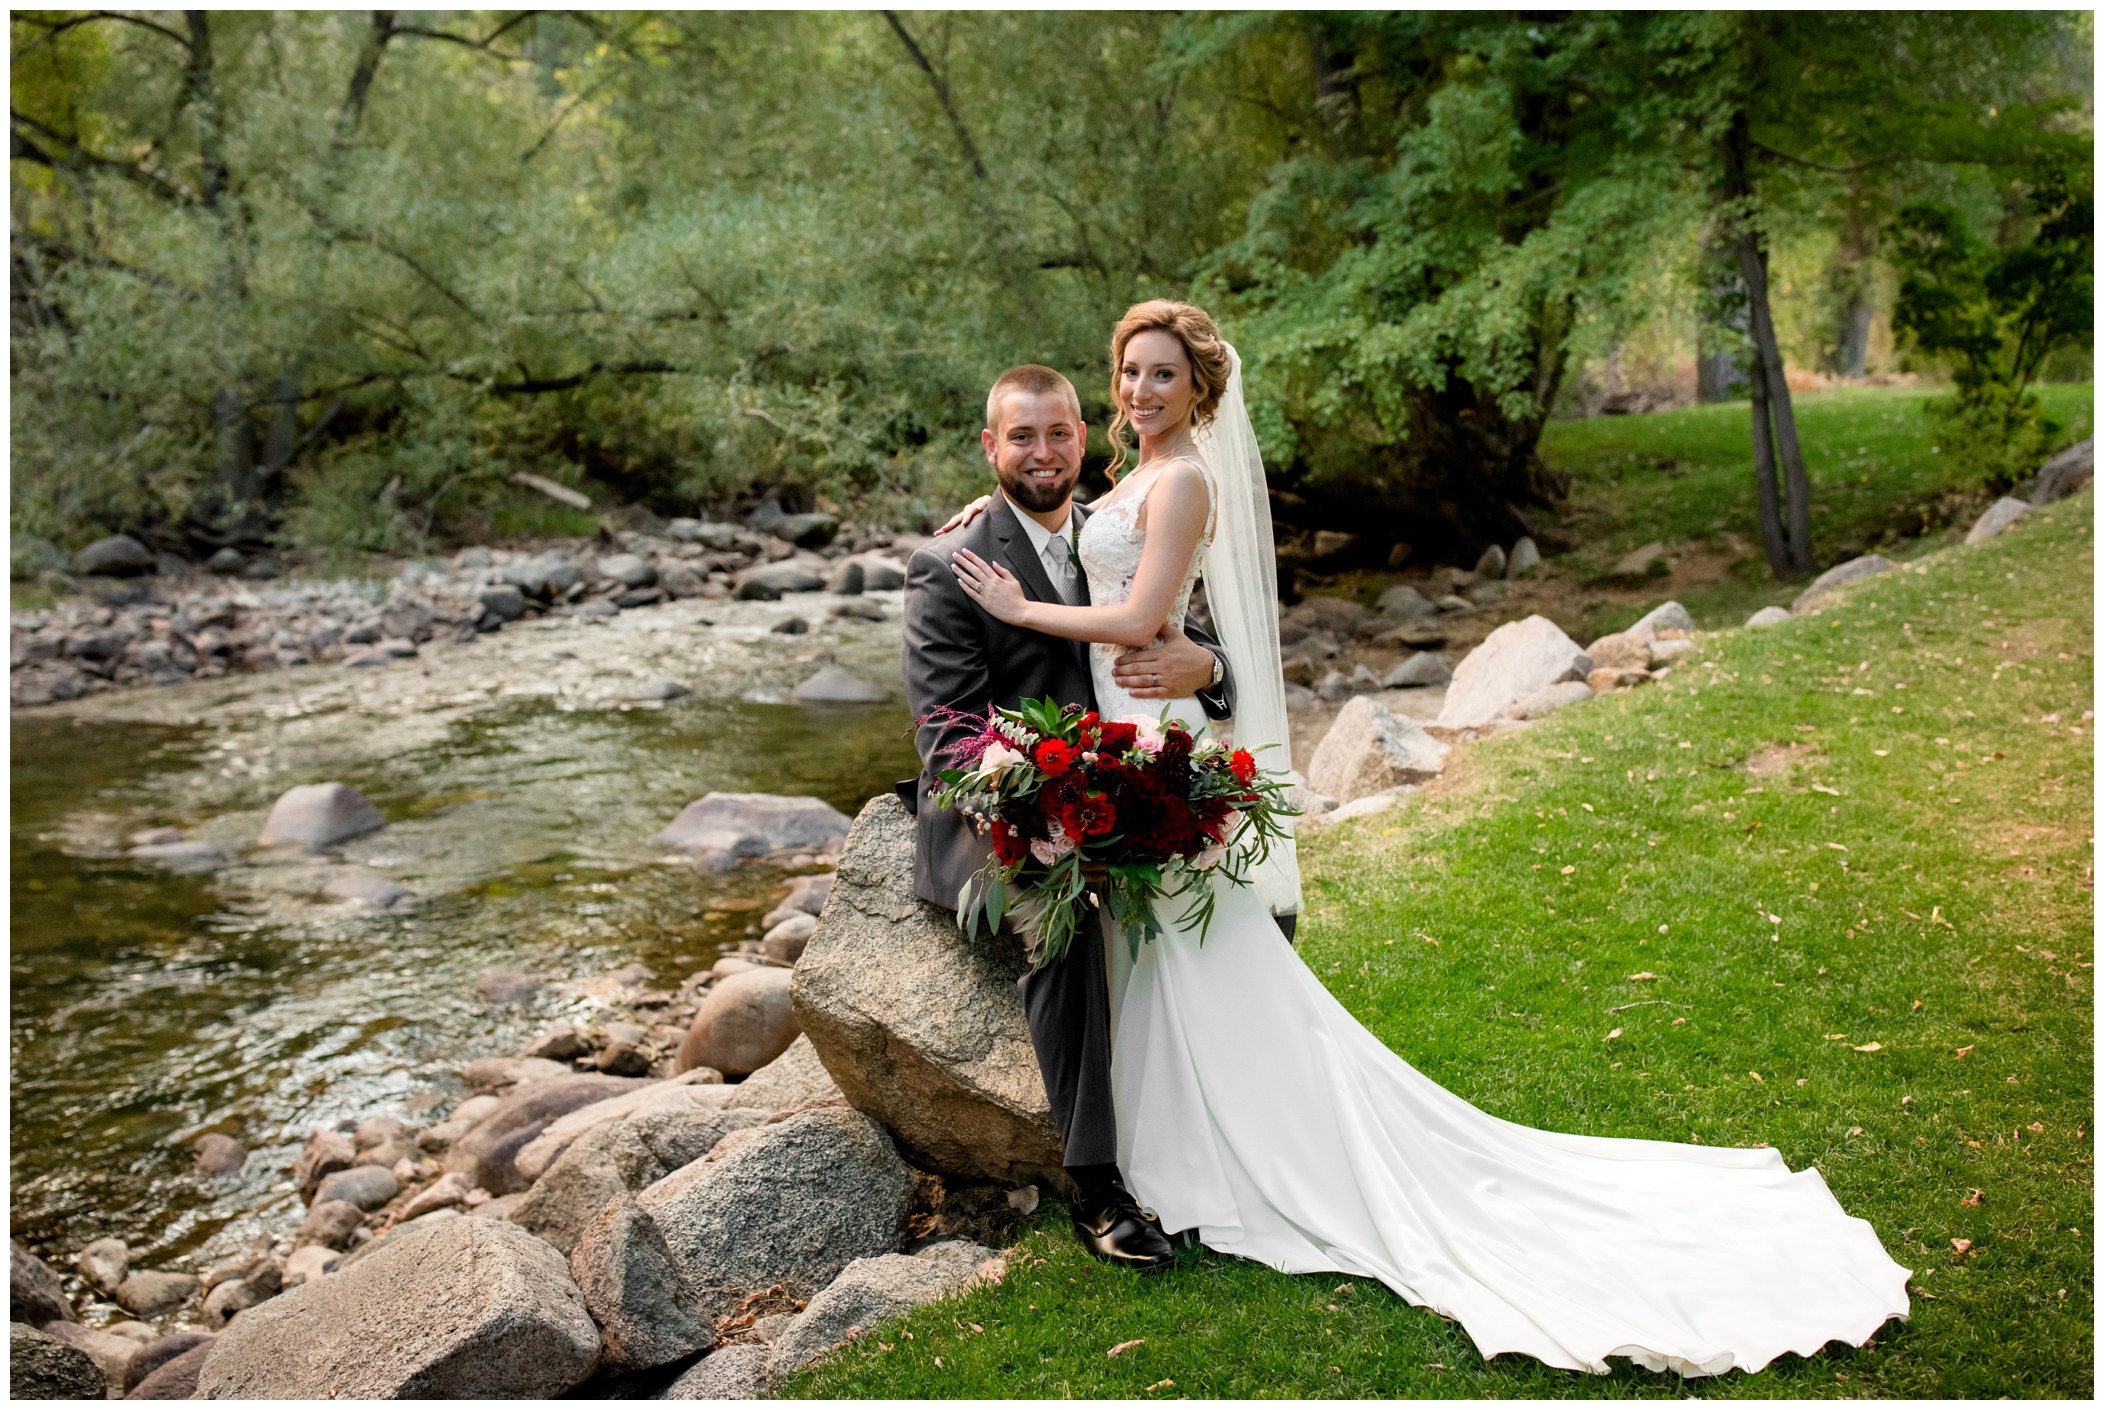 Boulder wedding pictures by Breckenridge Colorado photographer Plum Pretty Photography 